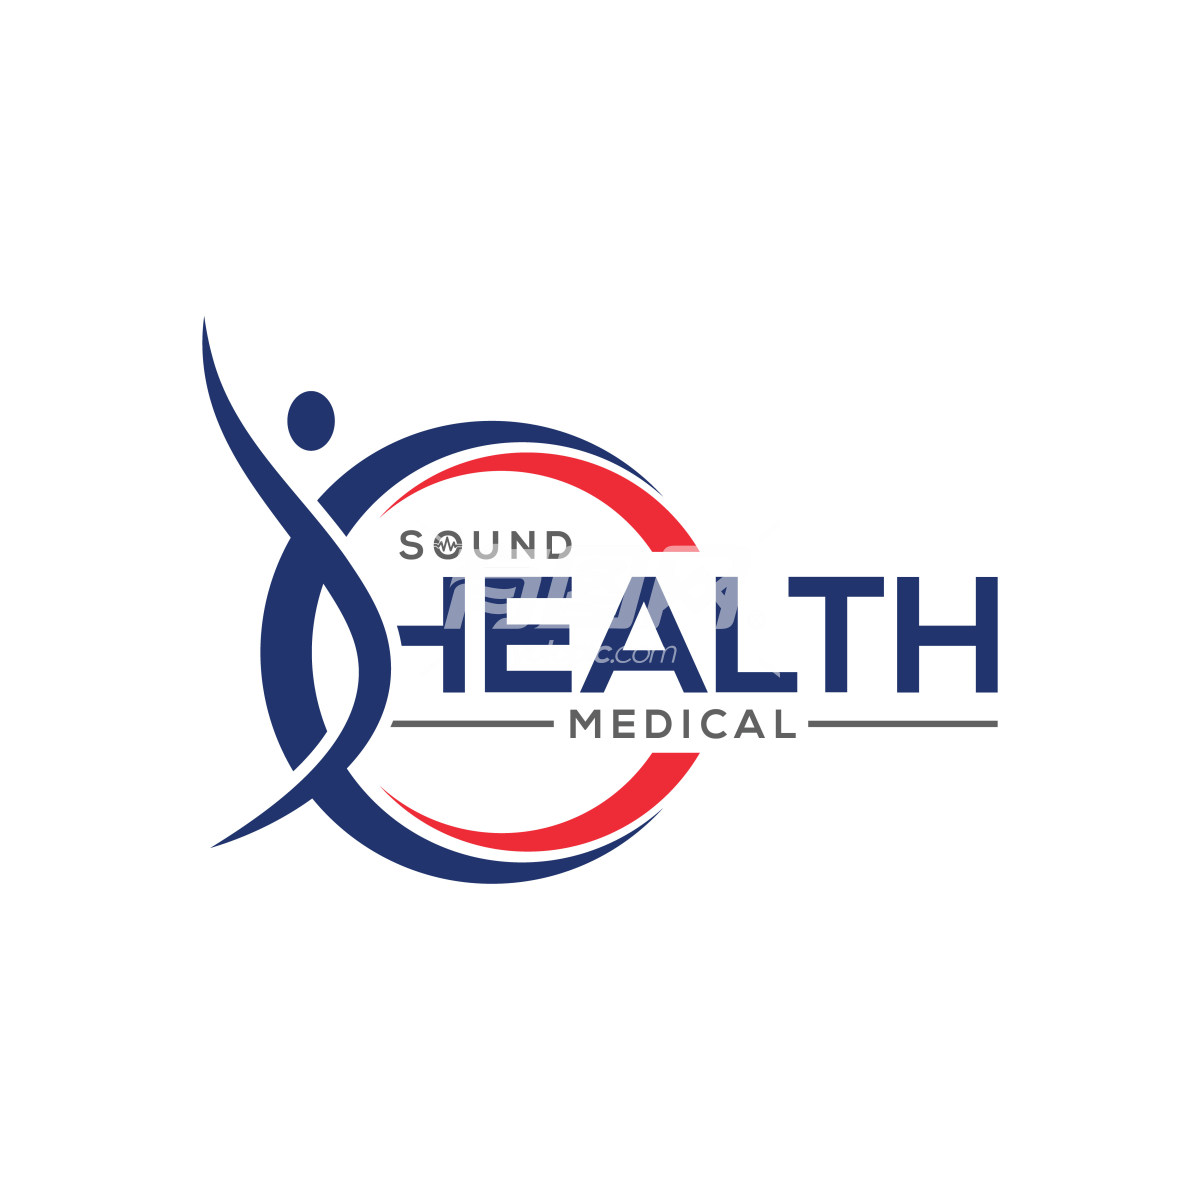 Sound Health Medical的医疗公司的标志